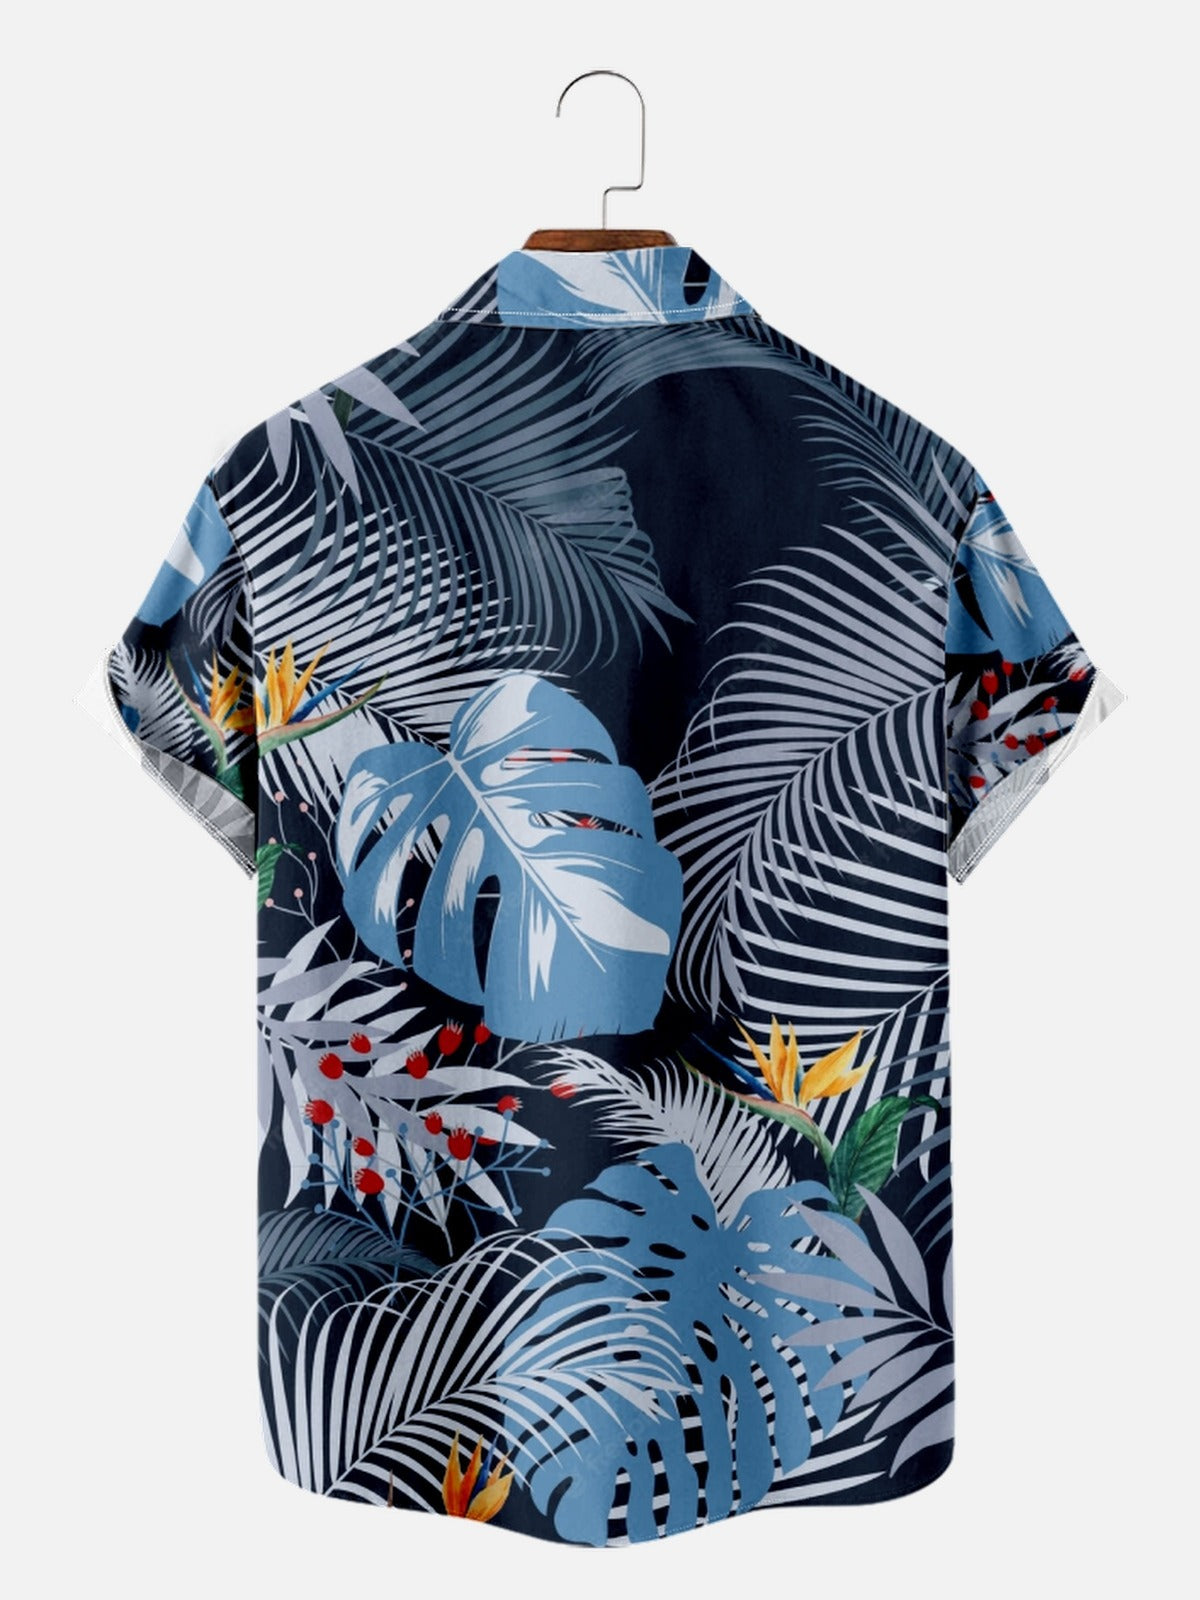 Tropical Plant Leaves Design Shirt for Men